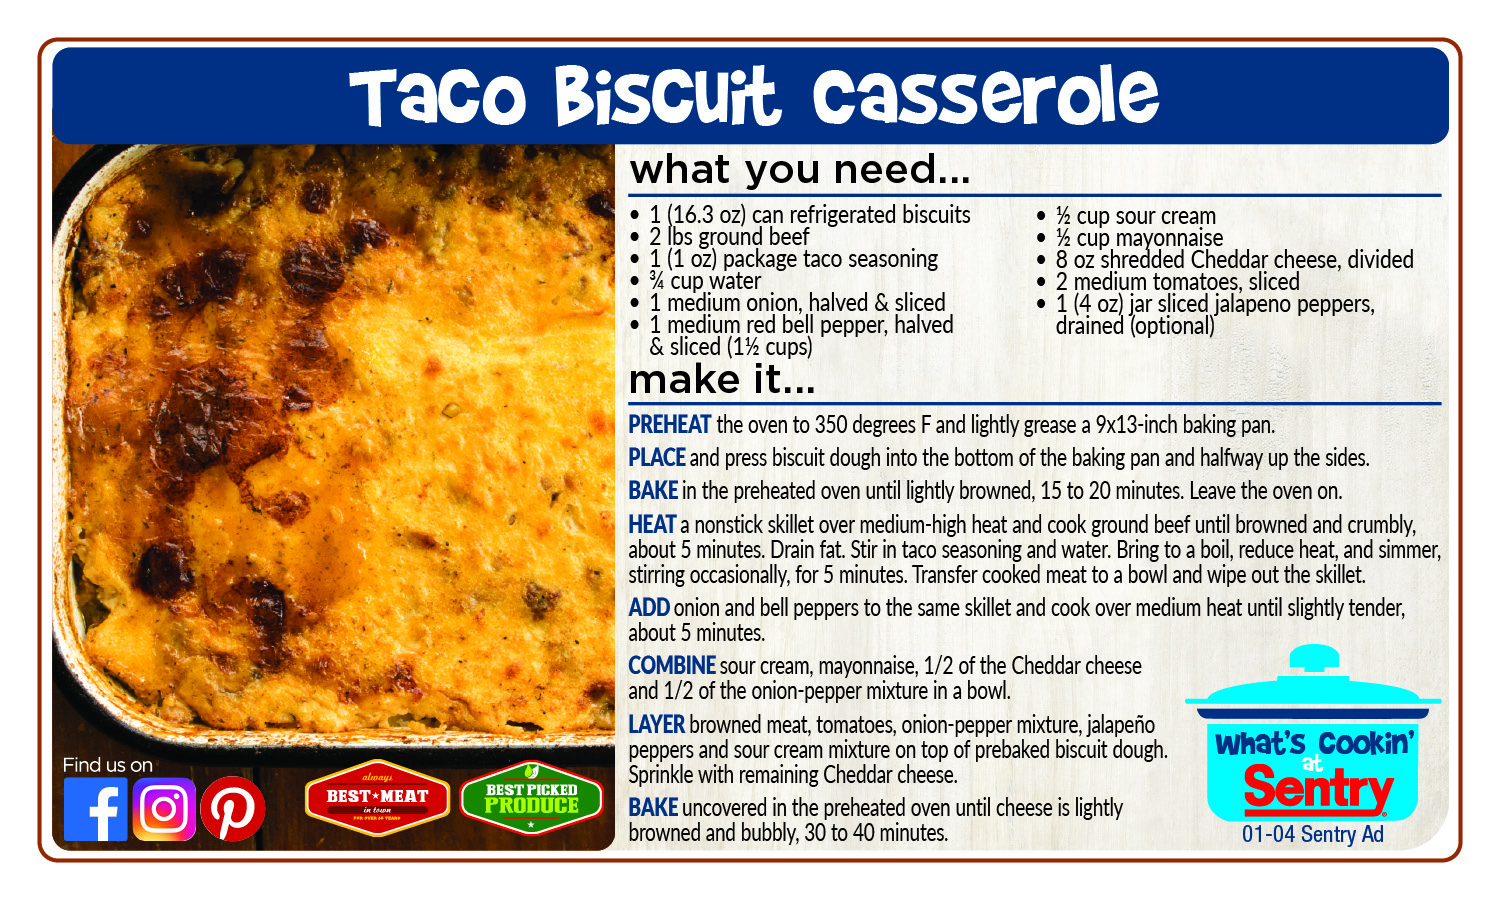 Taco Biscuit Casserole